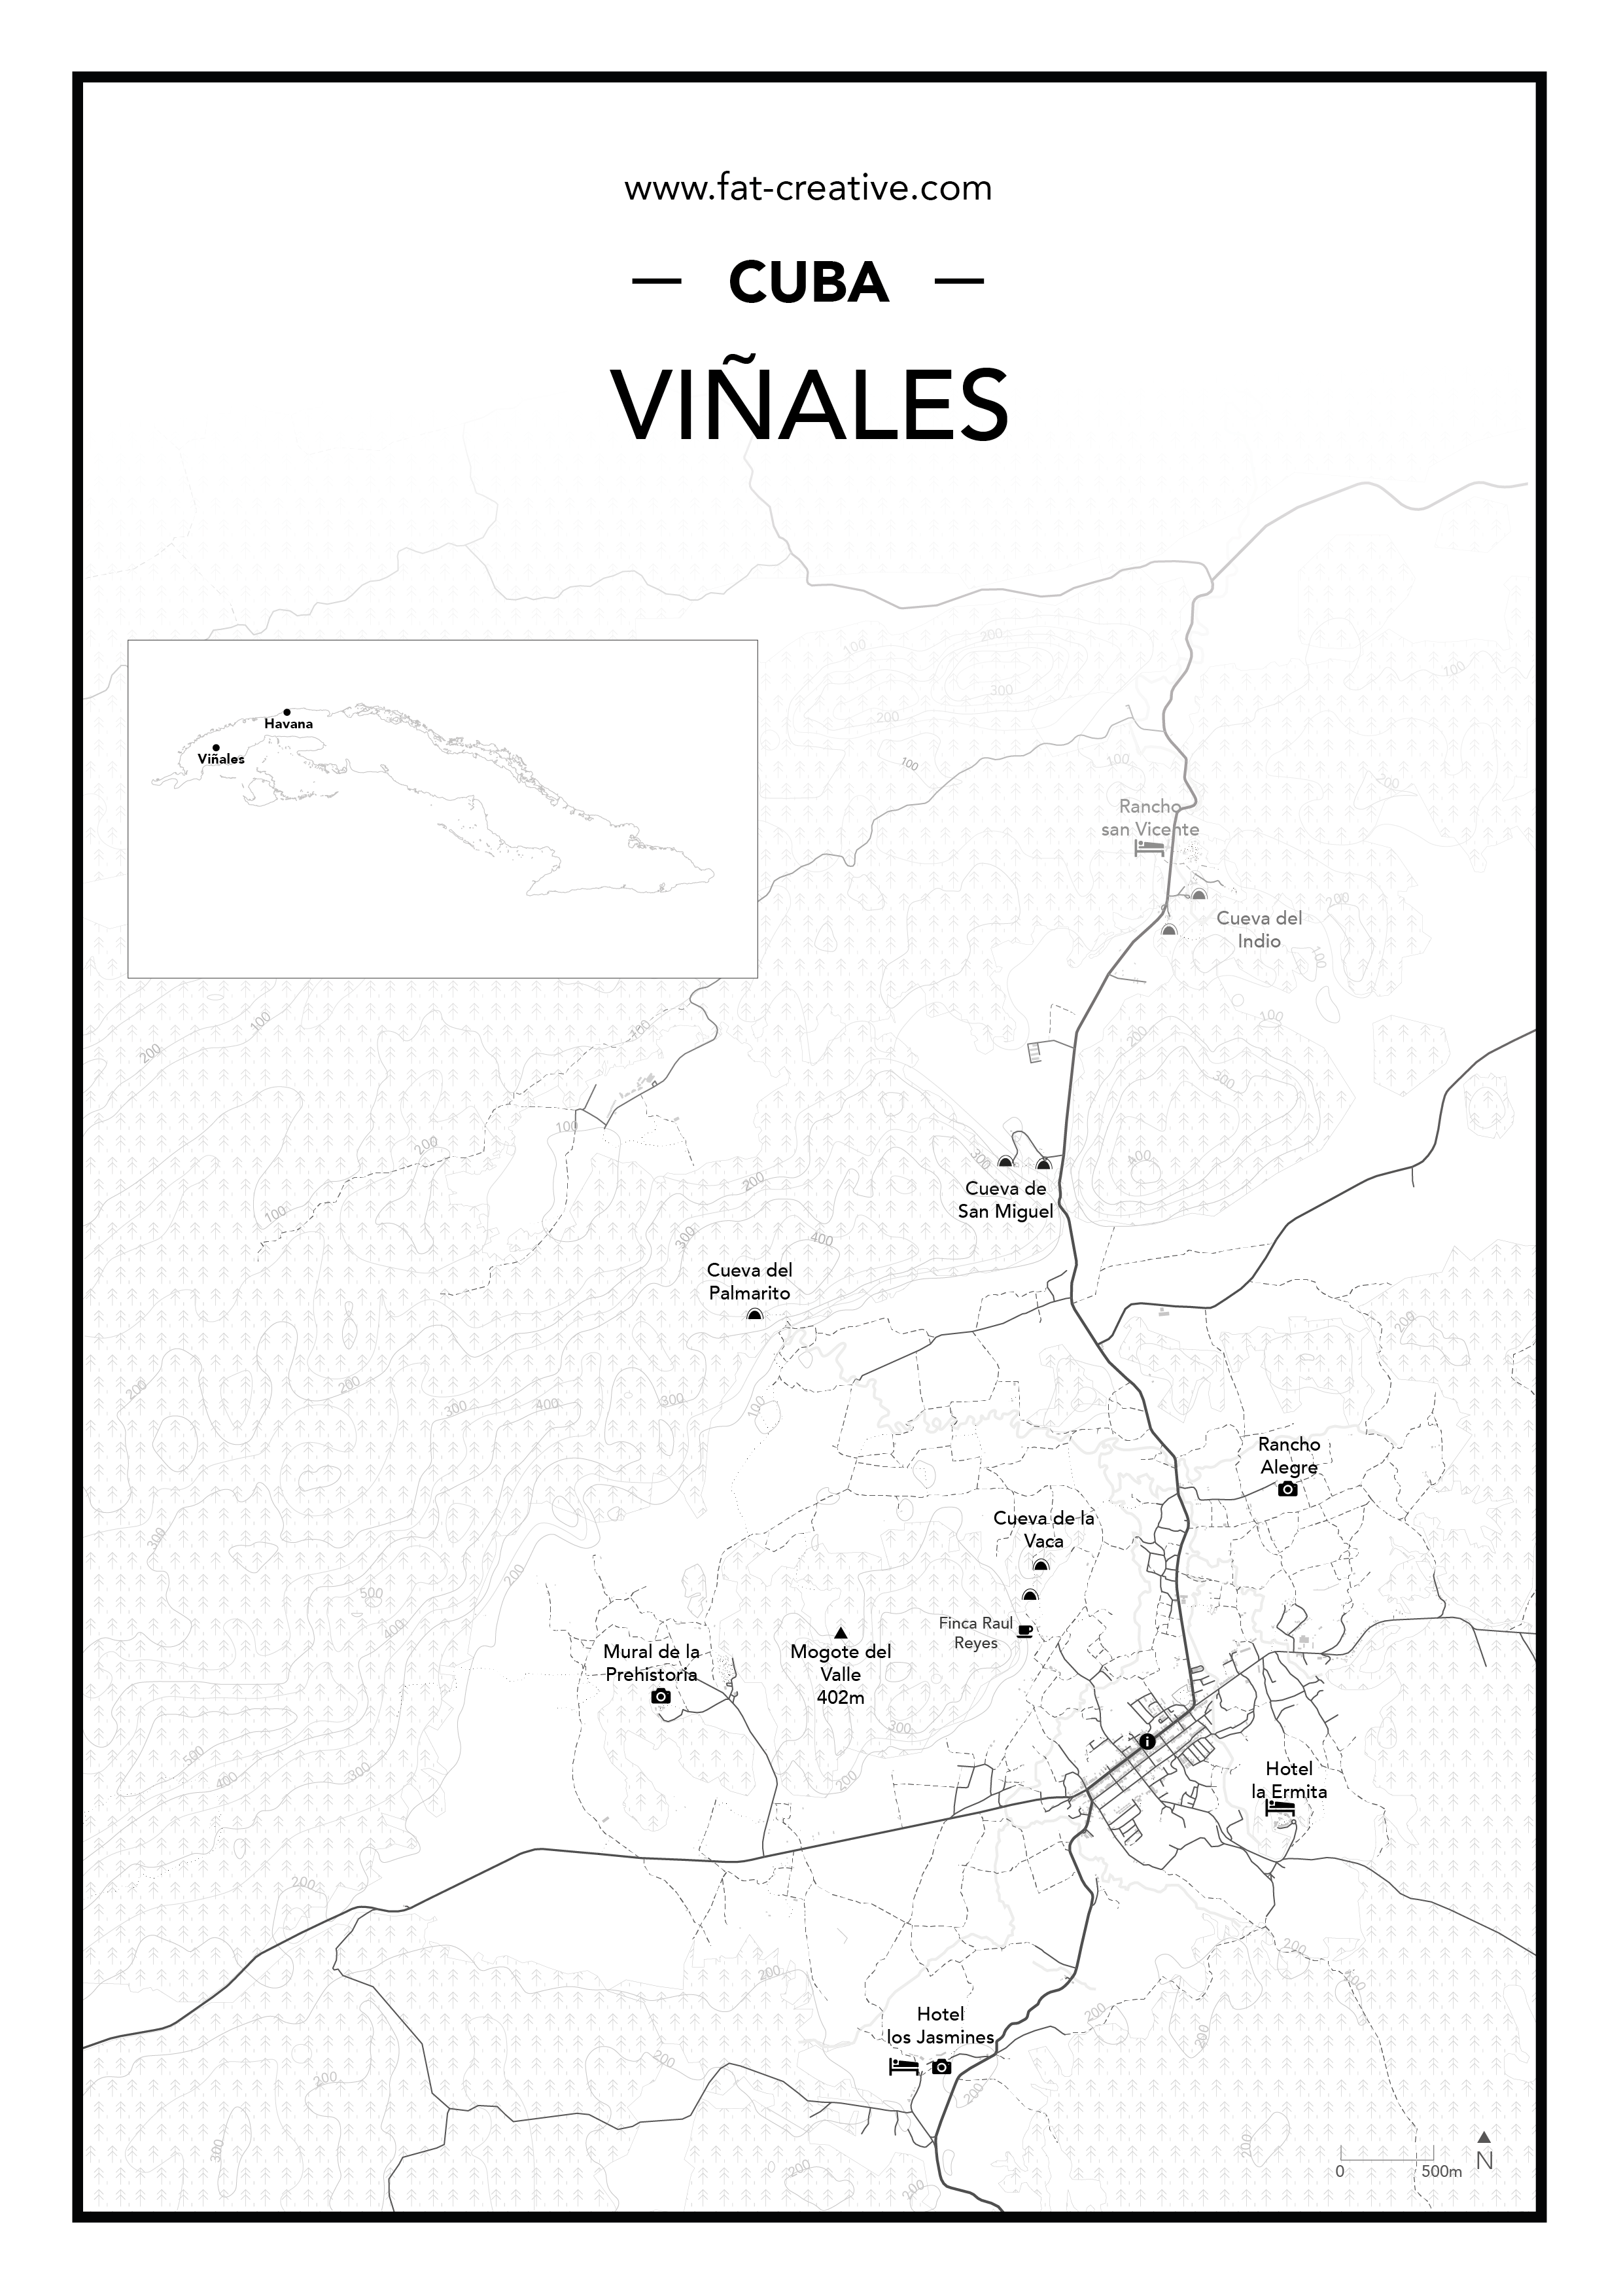 Vinales-2-01-01.png